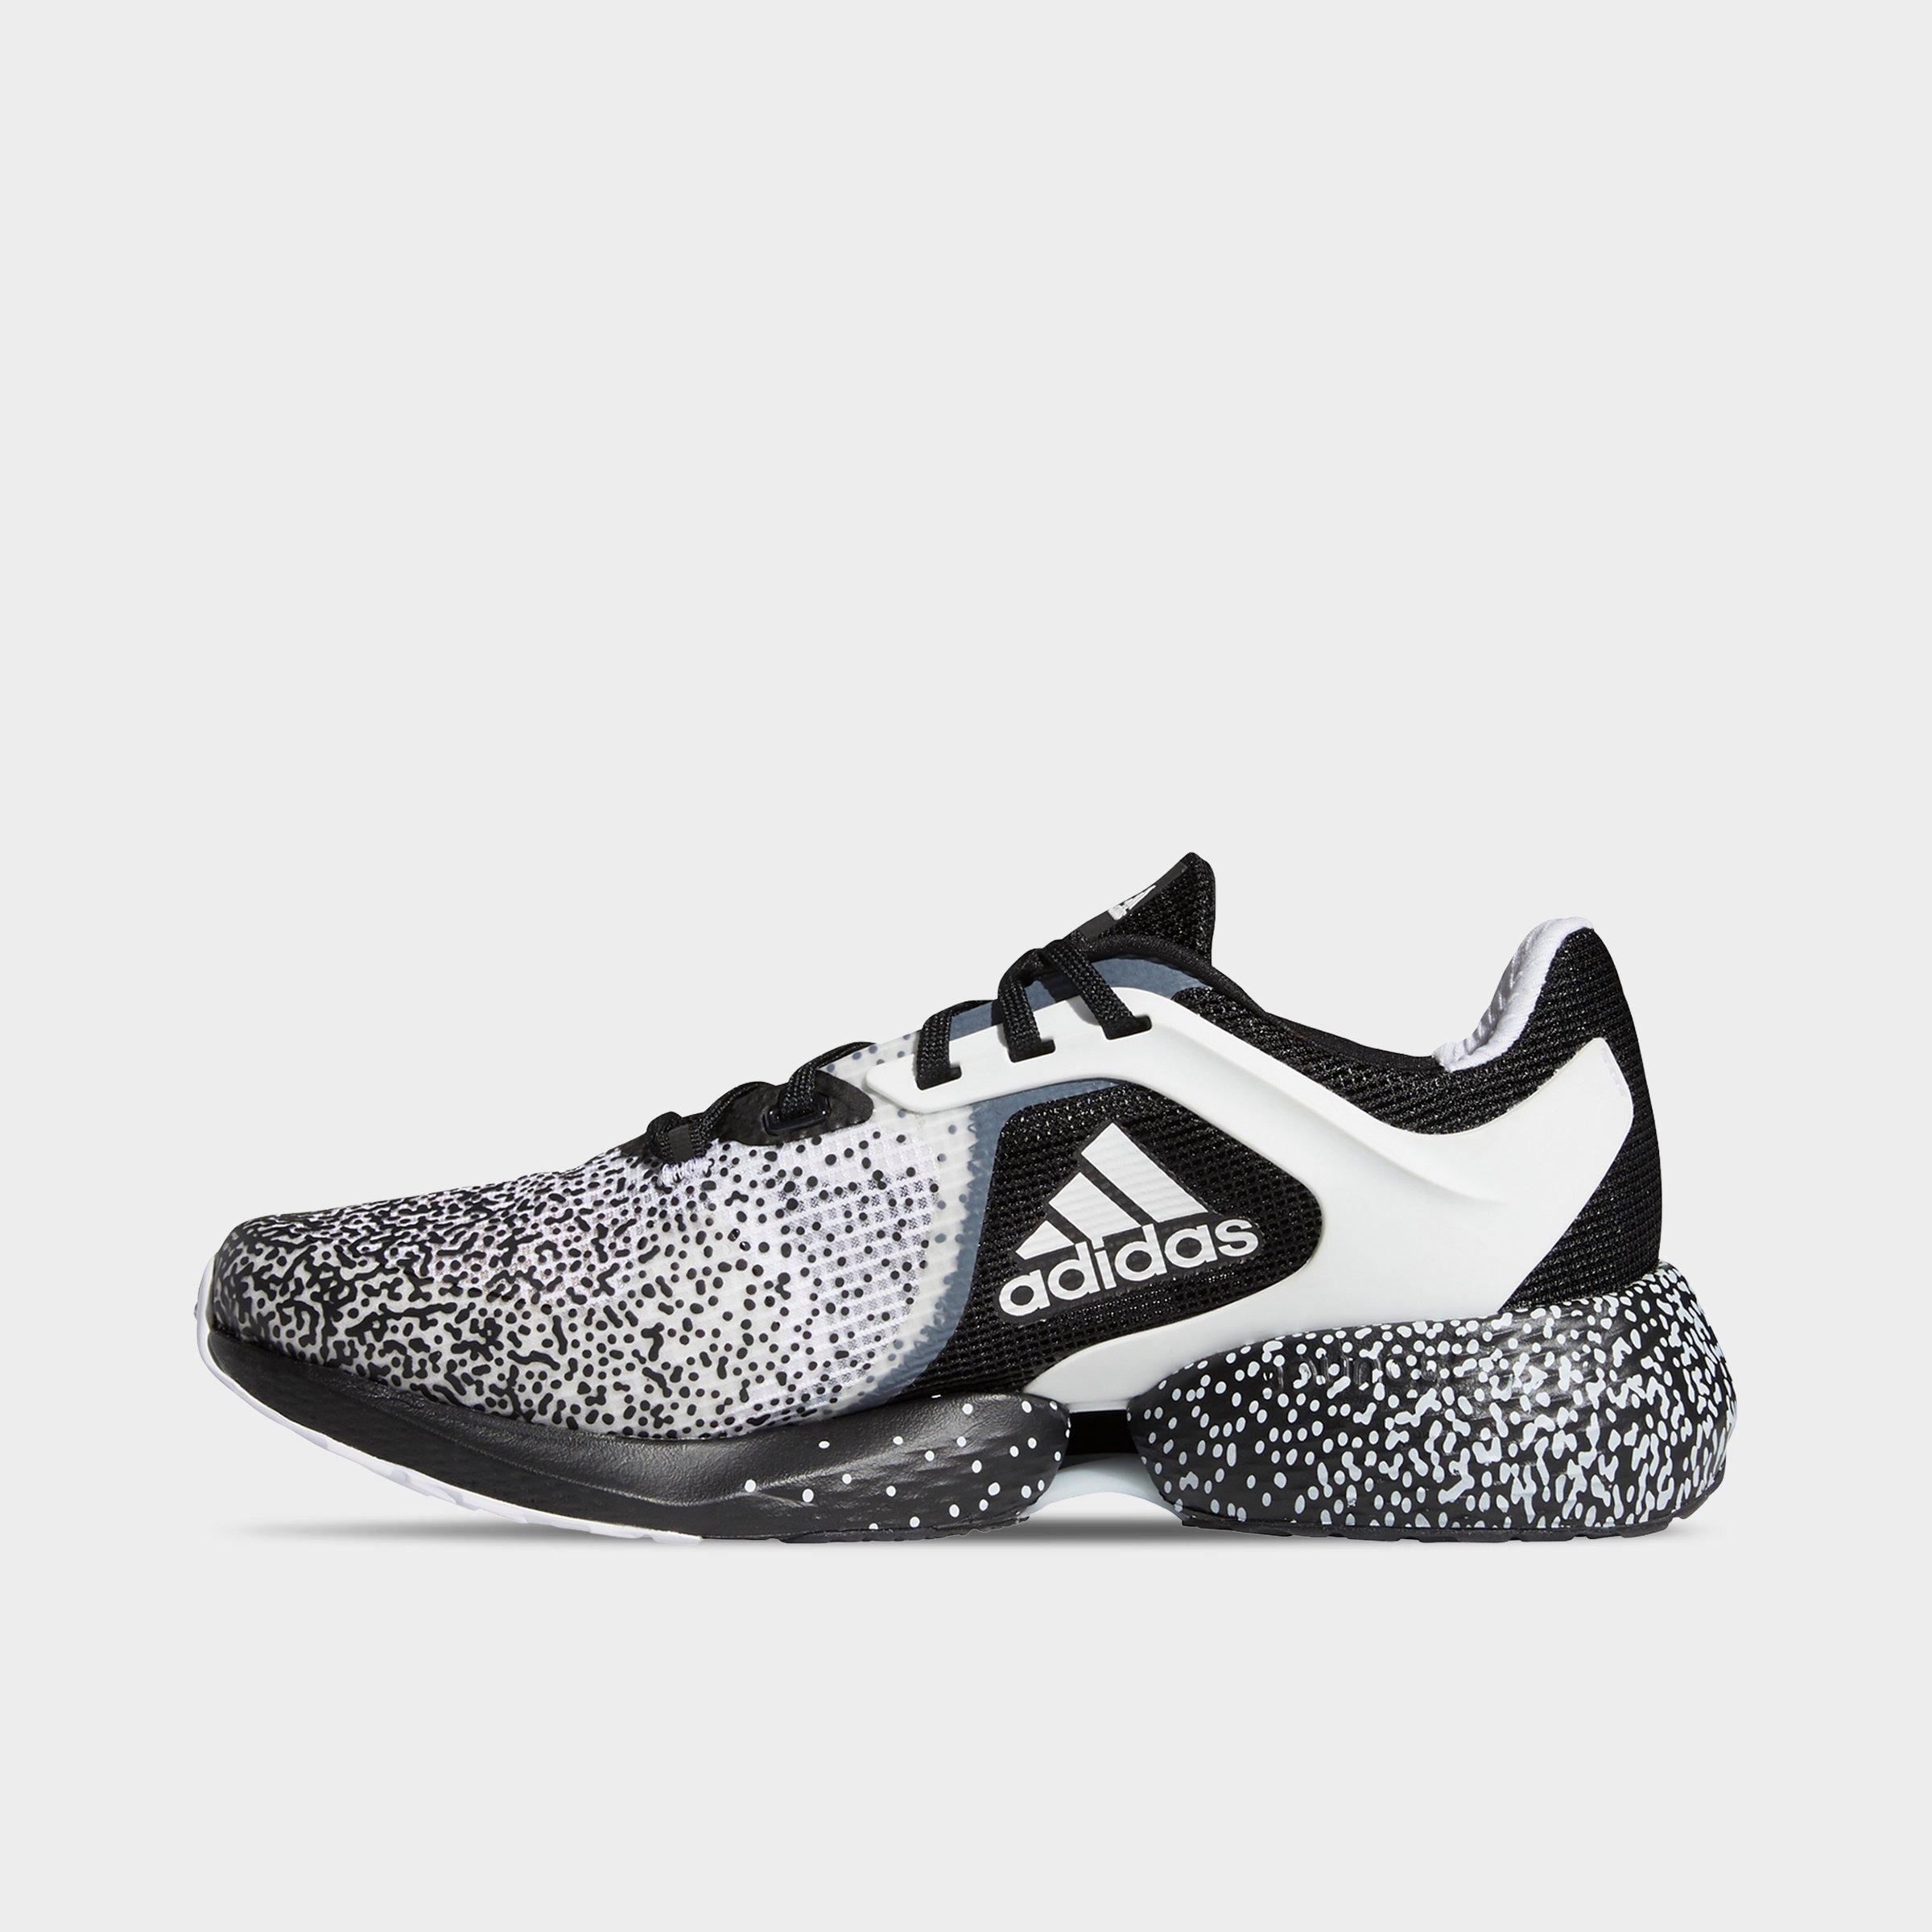 adidas 360 running shoes